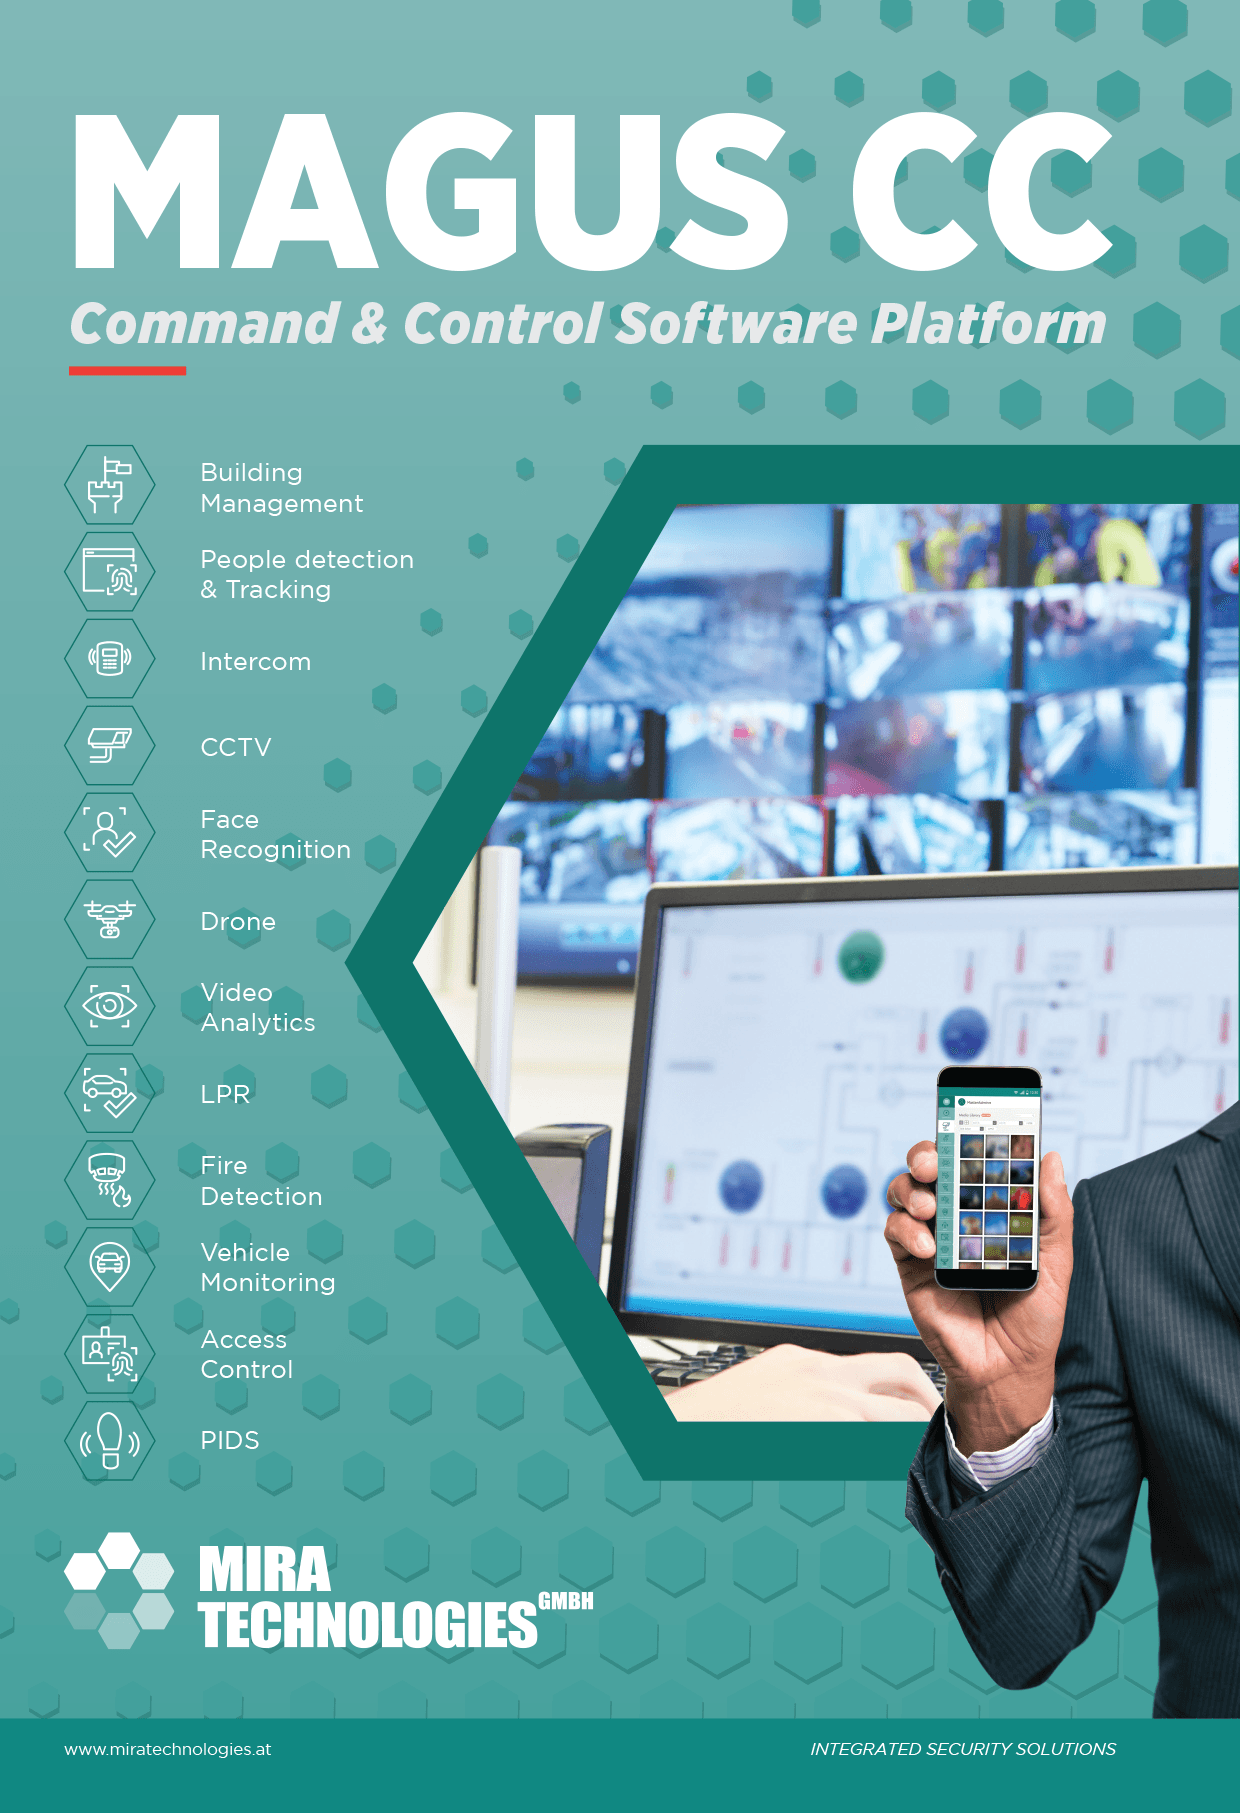 Command and Control Platform